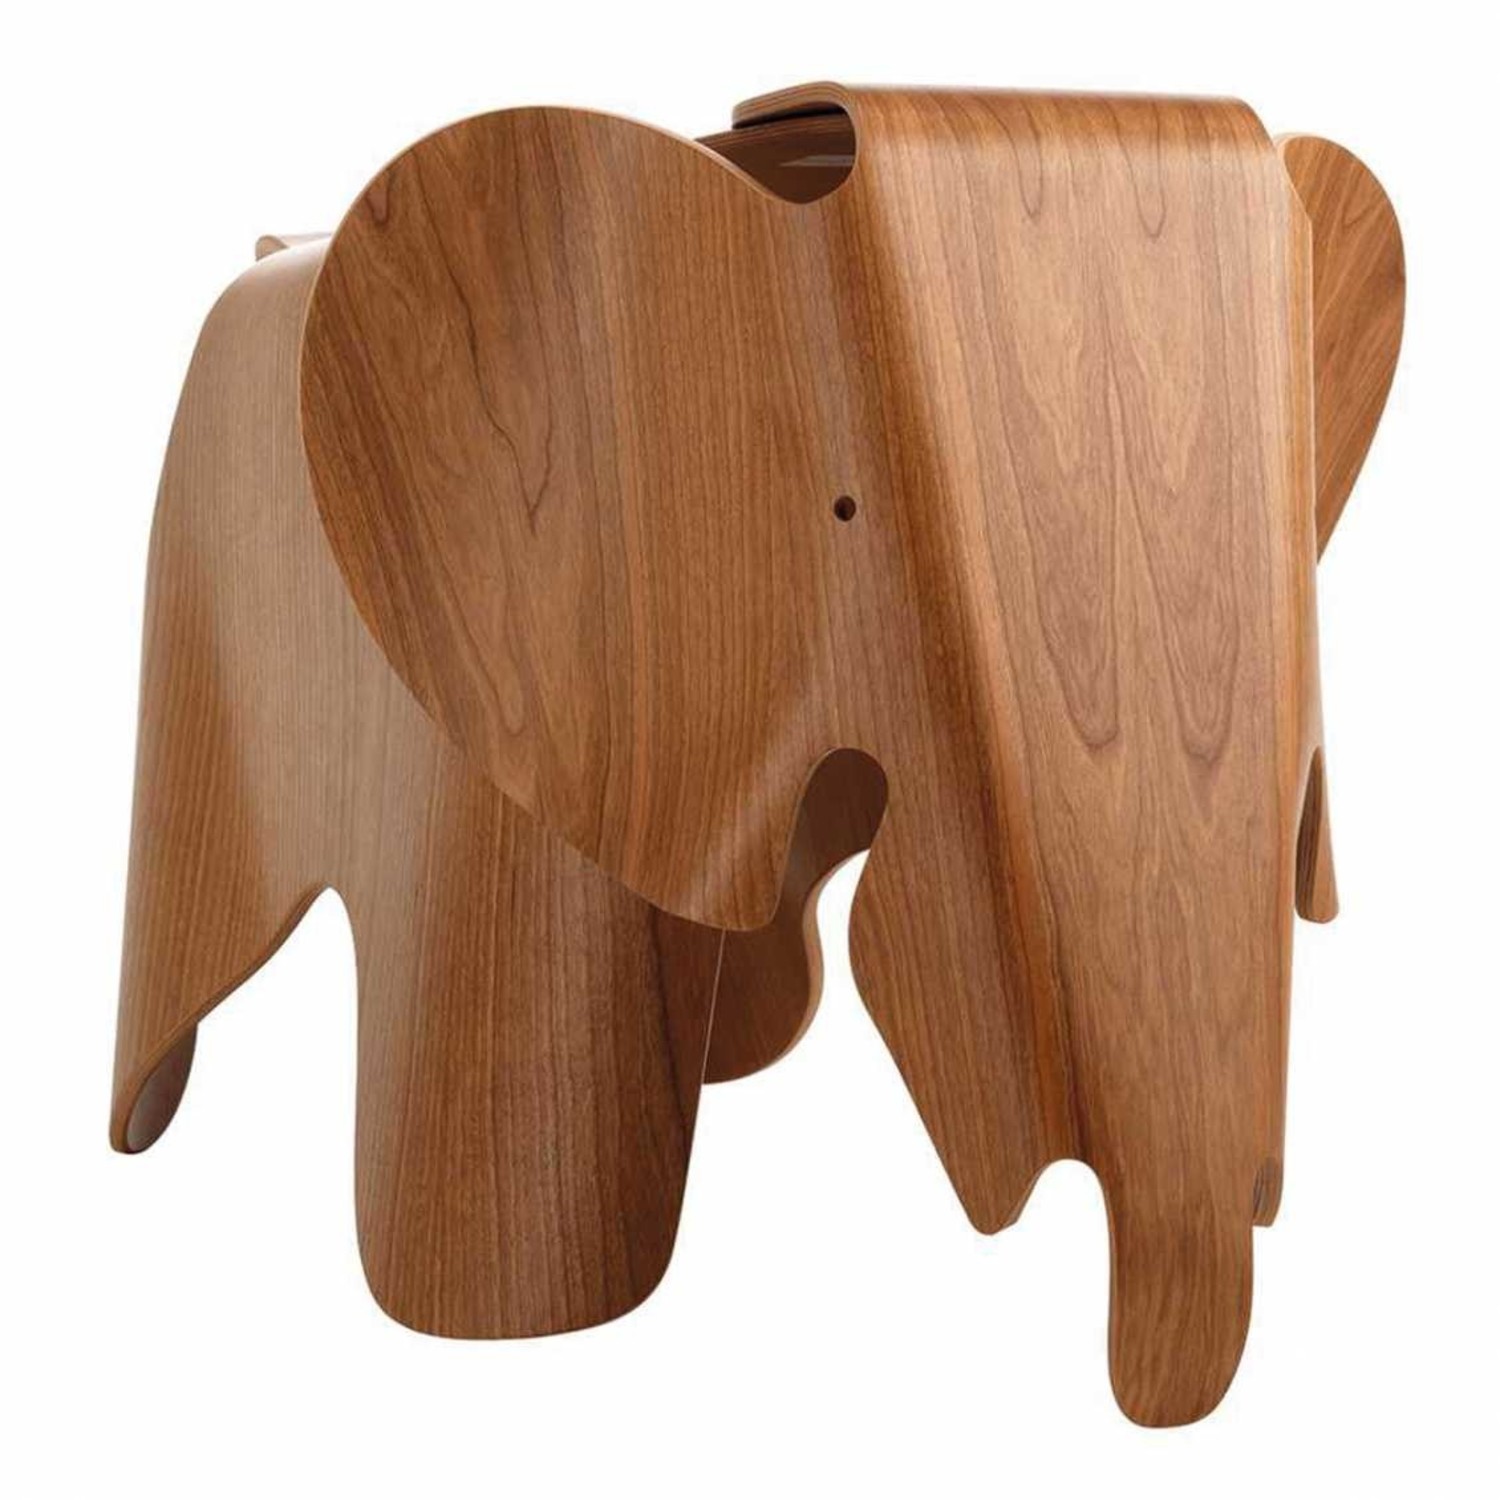 Eames Elephant multiplex cherry wood - NORDIC NEW